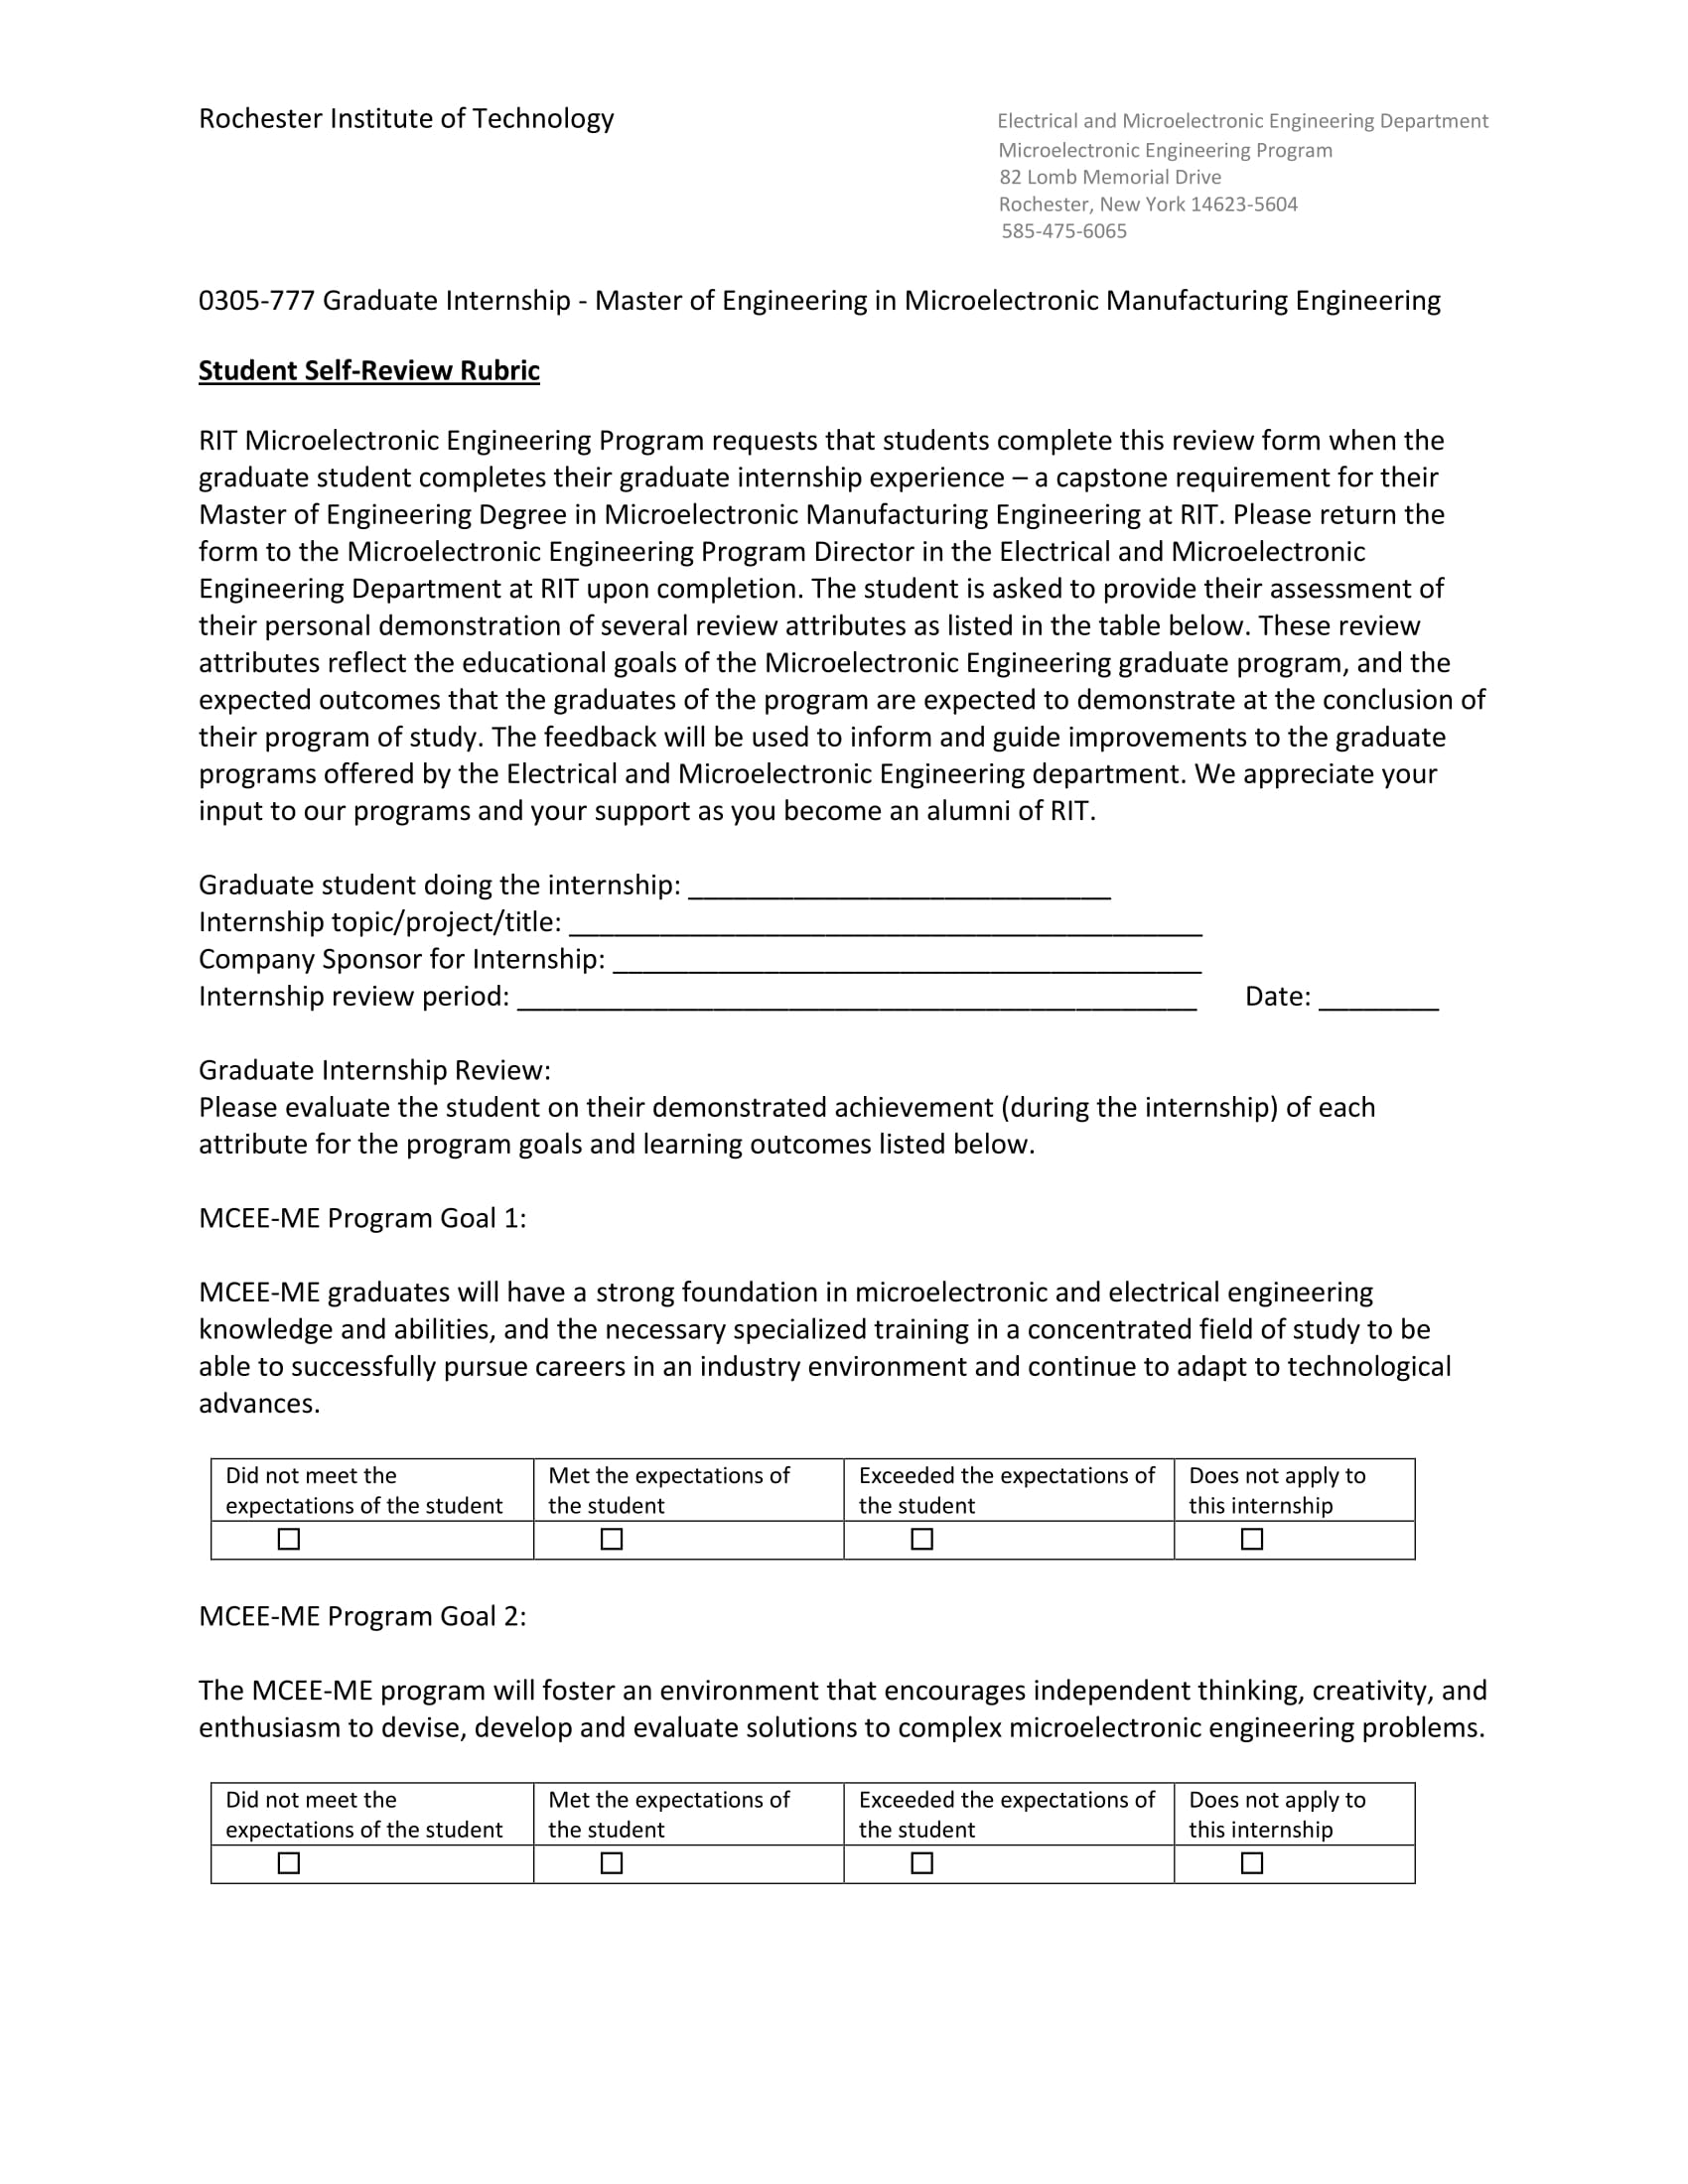 internship student review form 1